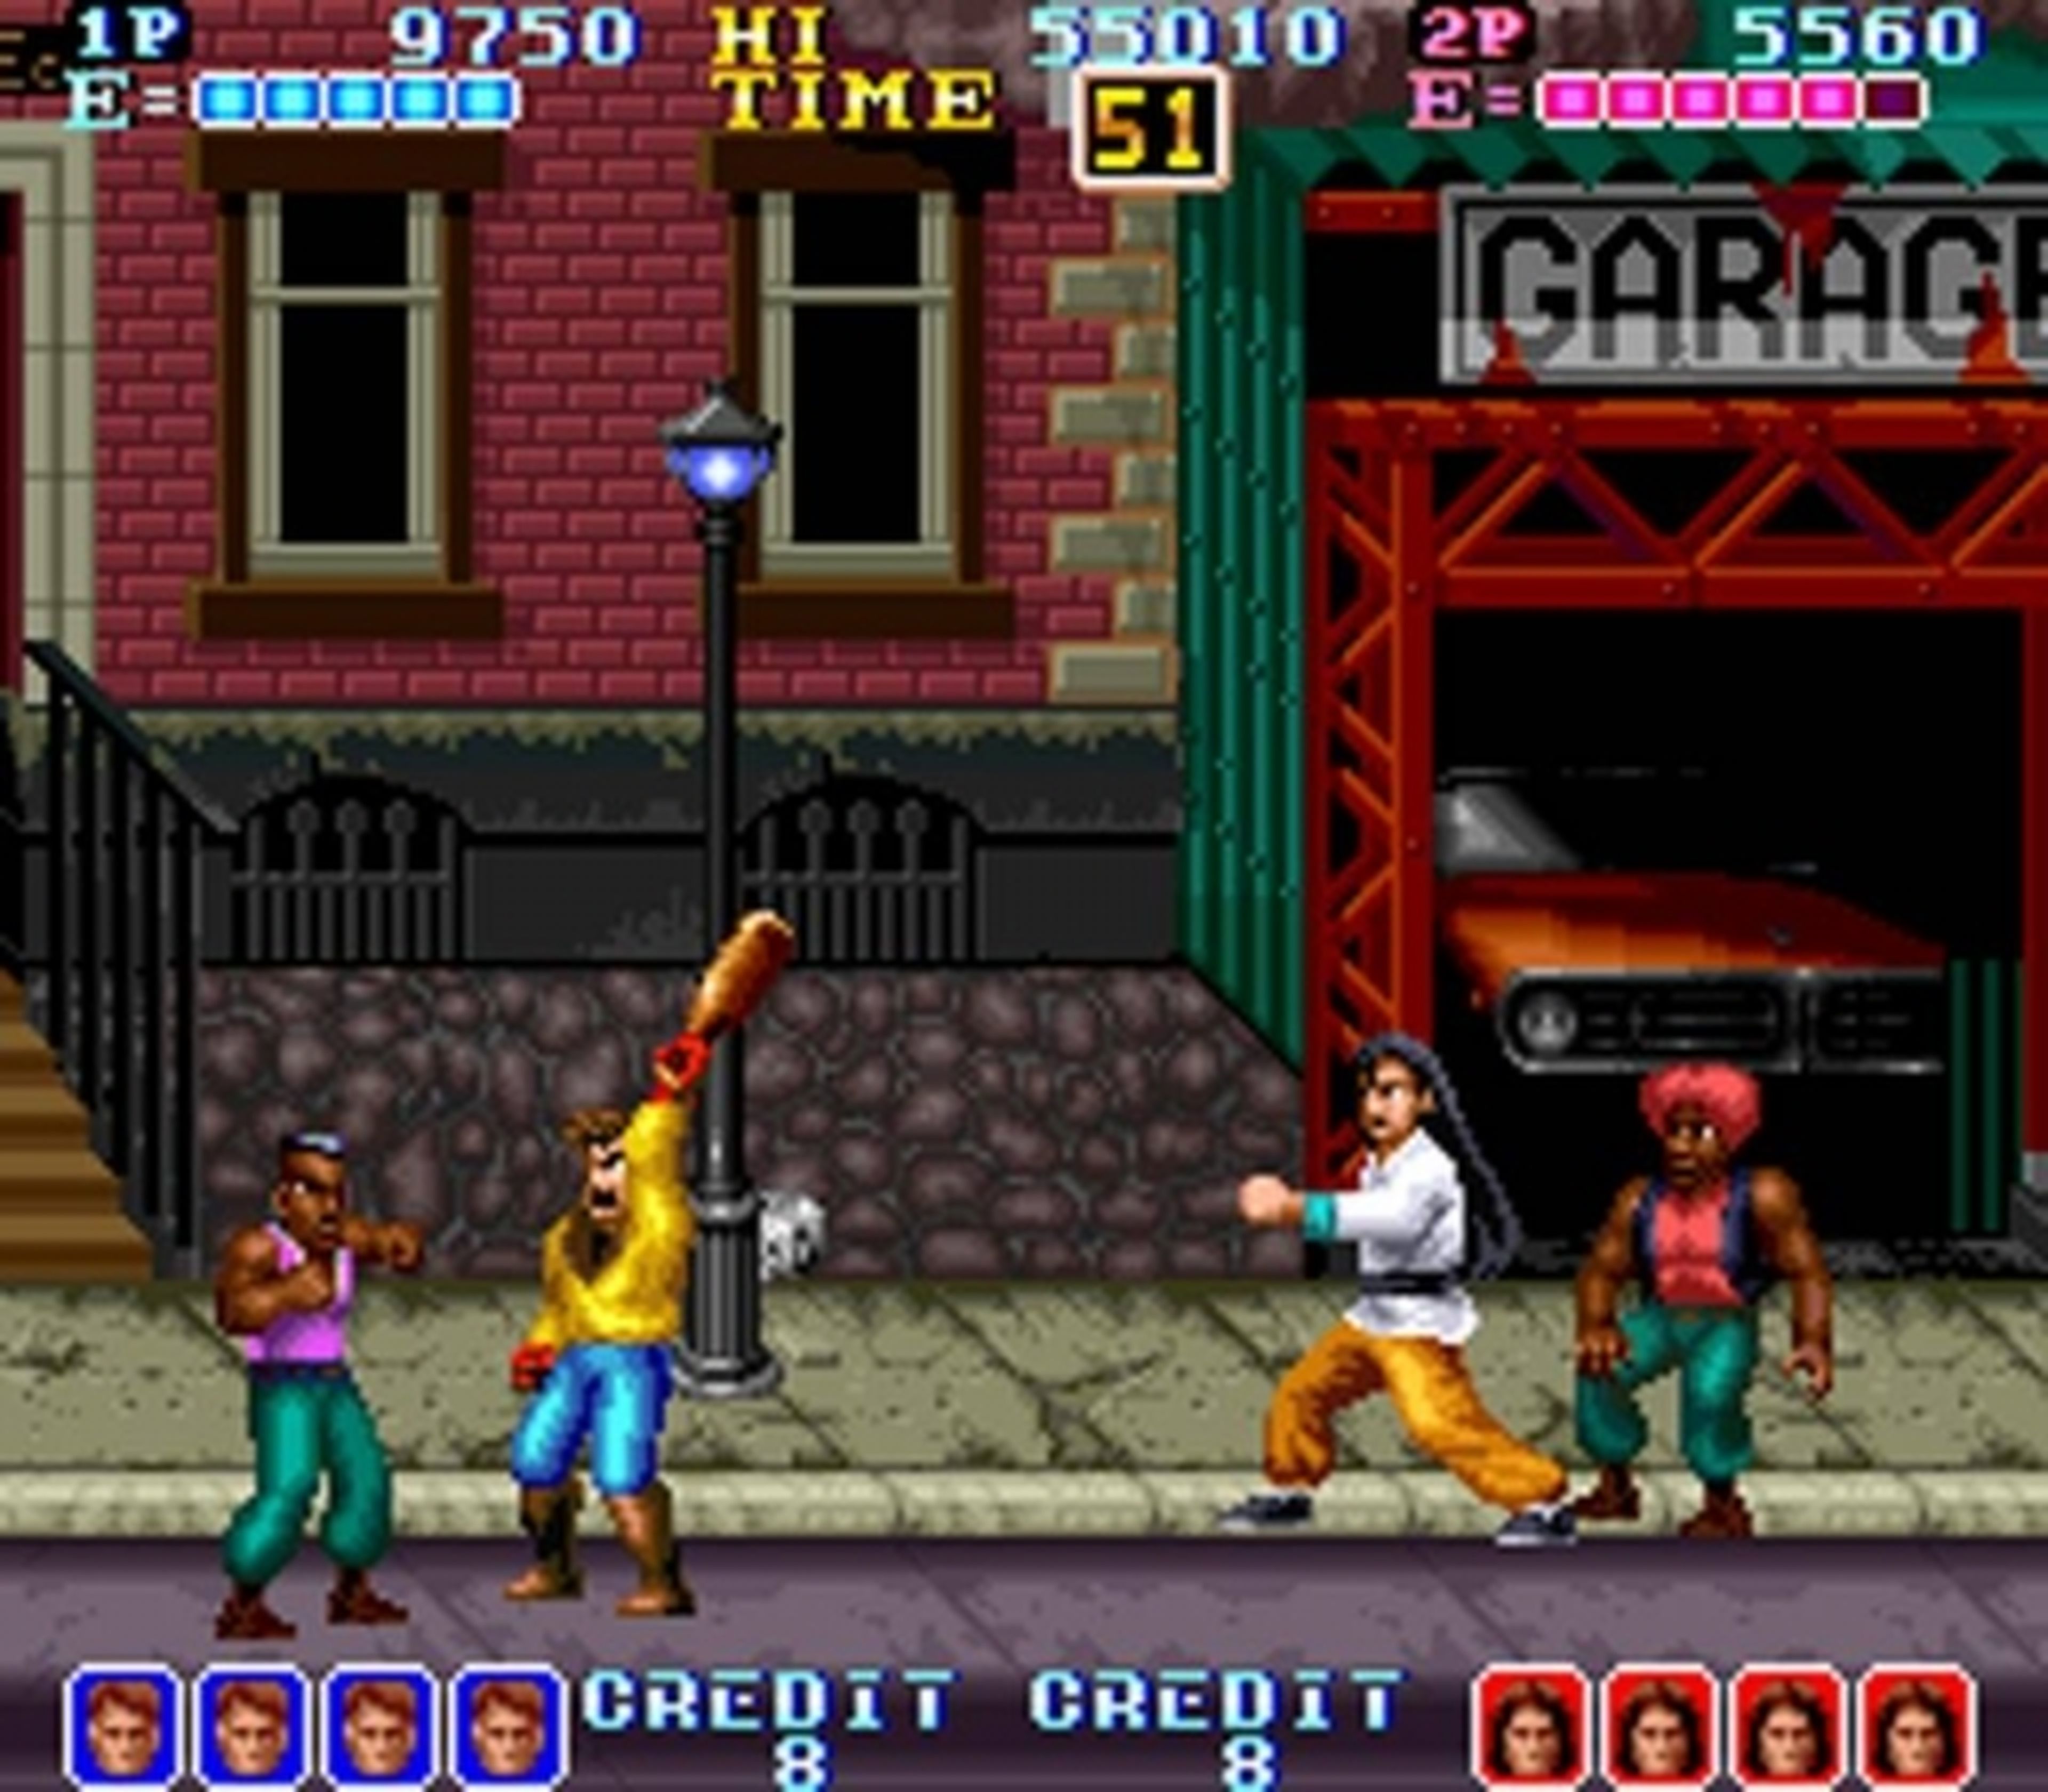 Arcade Run n Gun. Gang Wars PSP. Gangs wars pixel